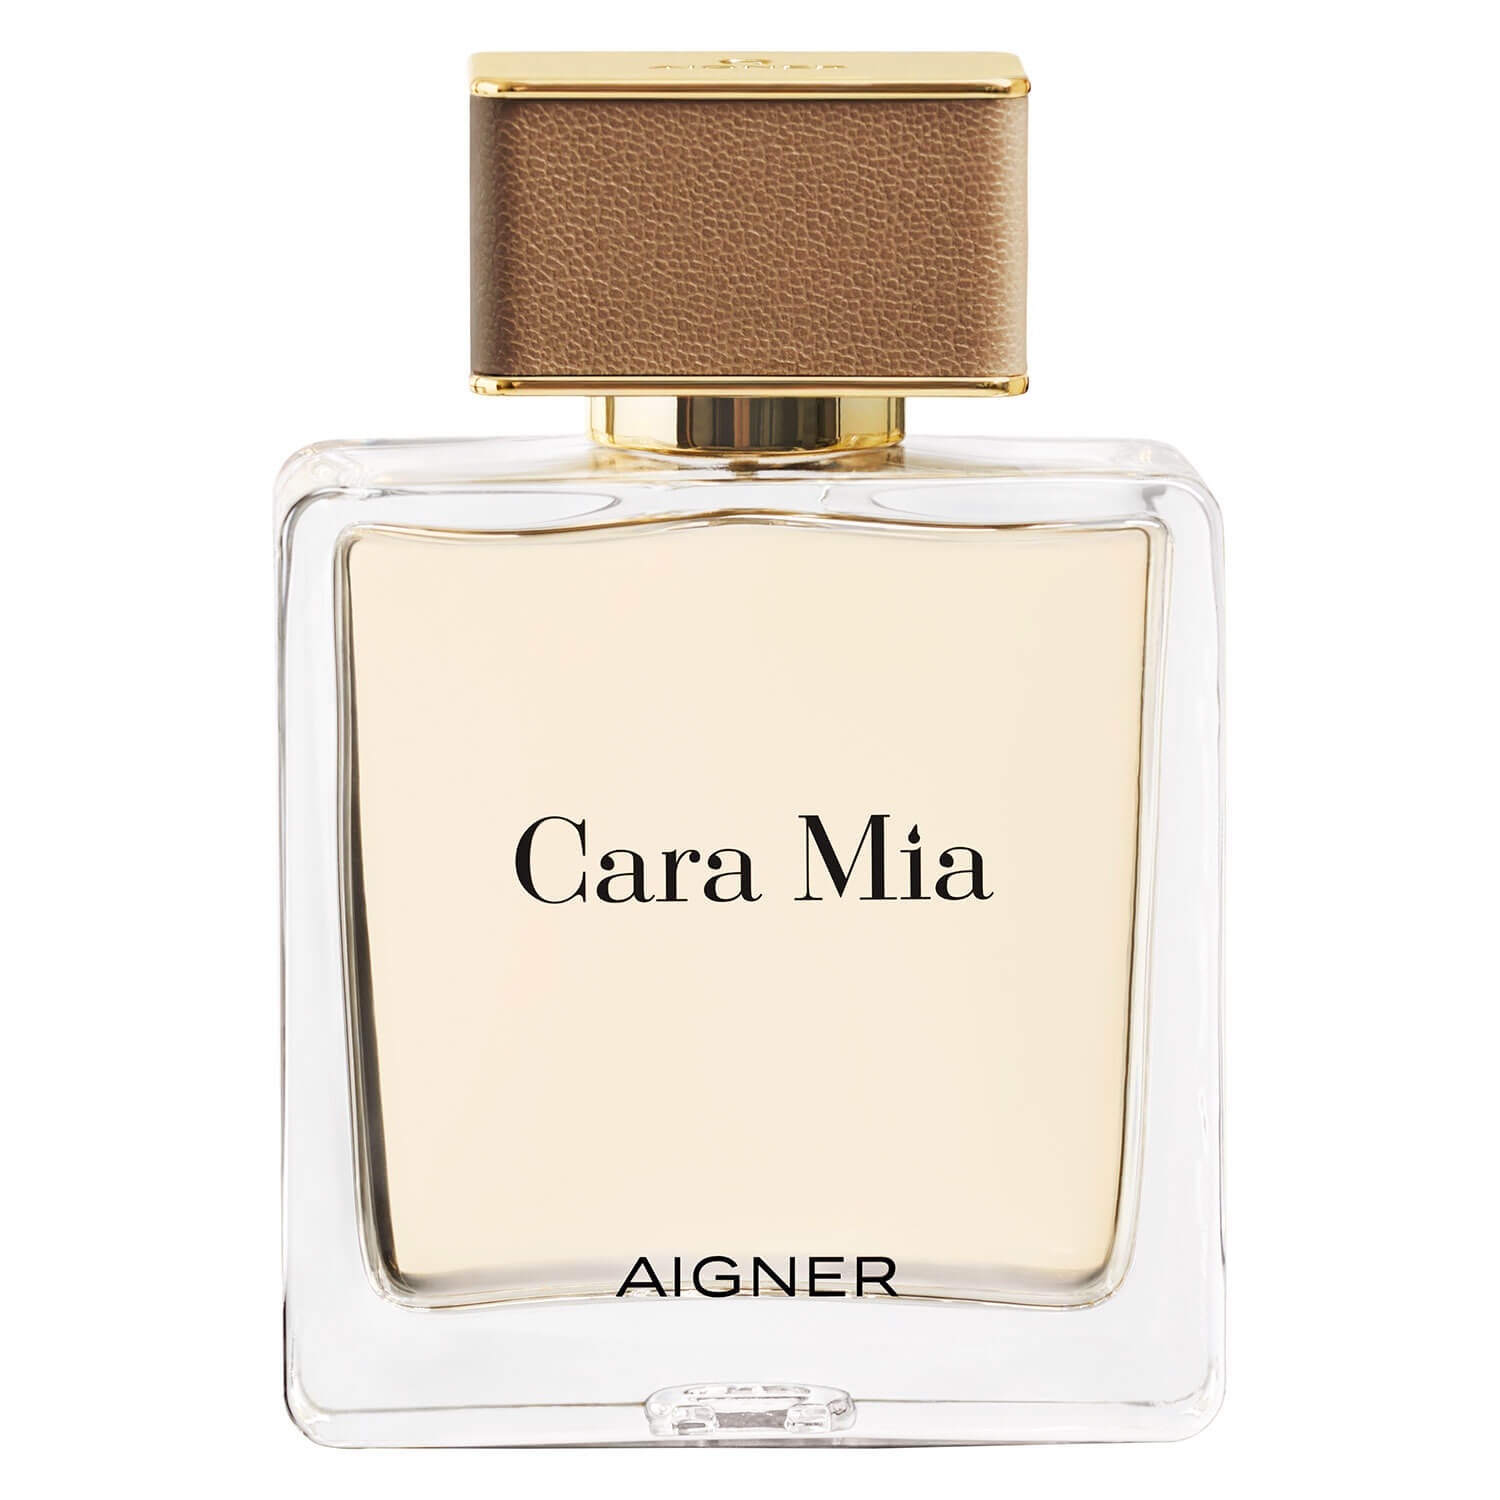 Produktbild von Aigner - Cara Mia Eau de Parfum